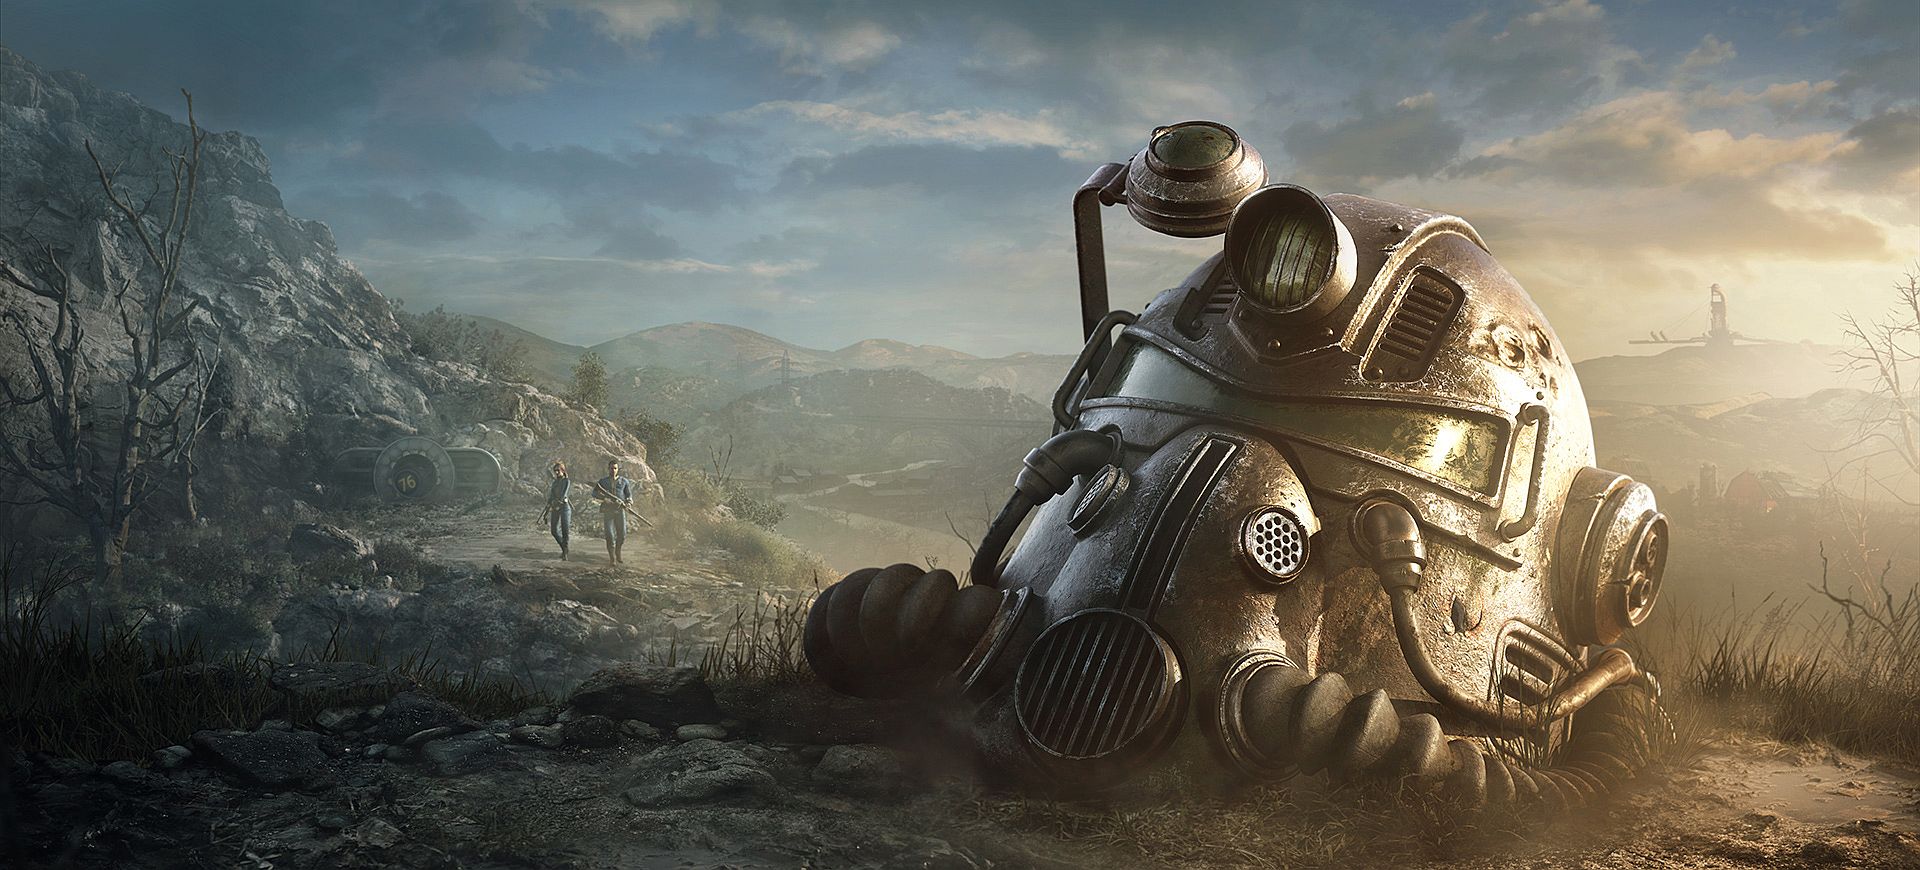 Fallout 76 B.E.T.A dates detailed